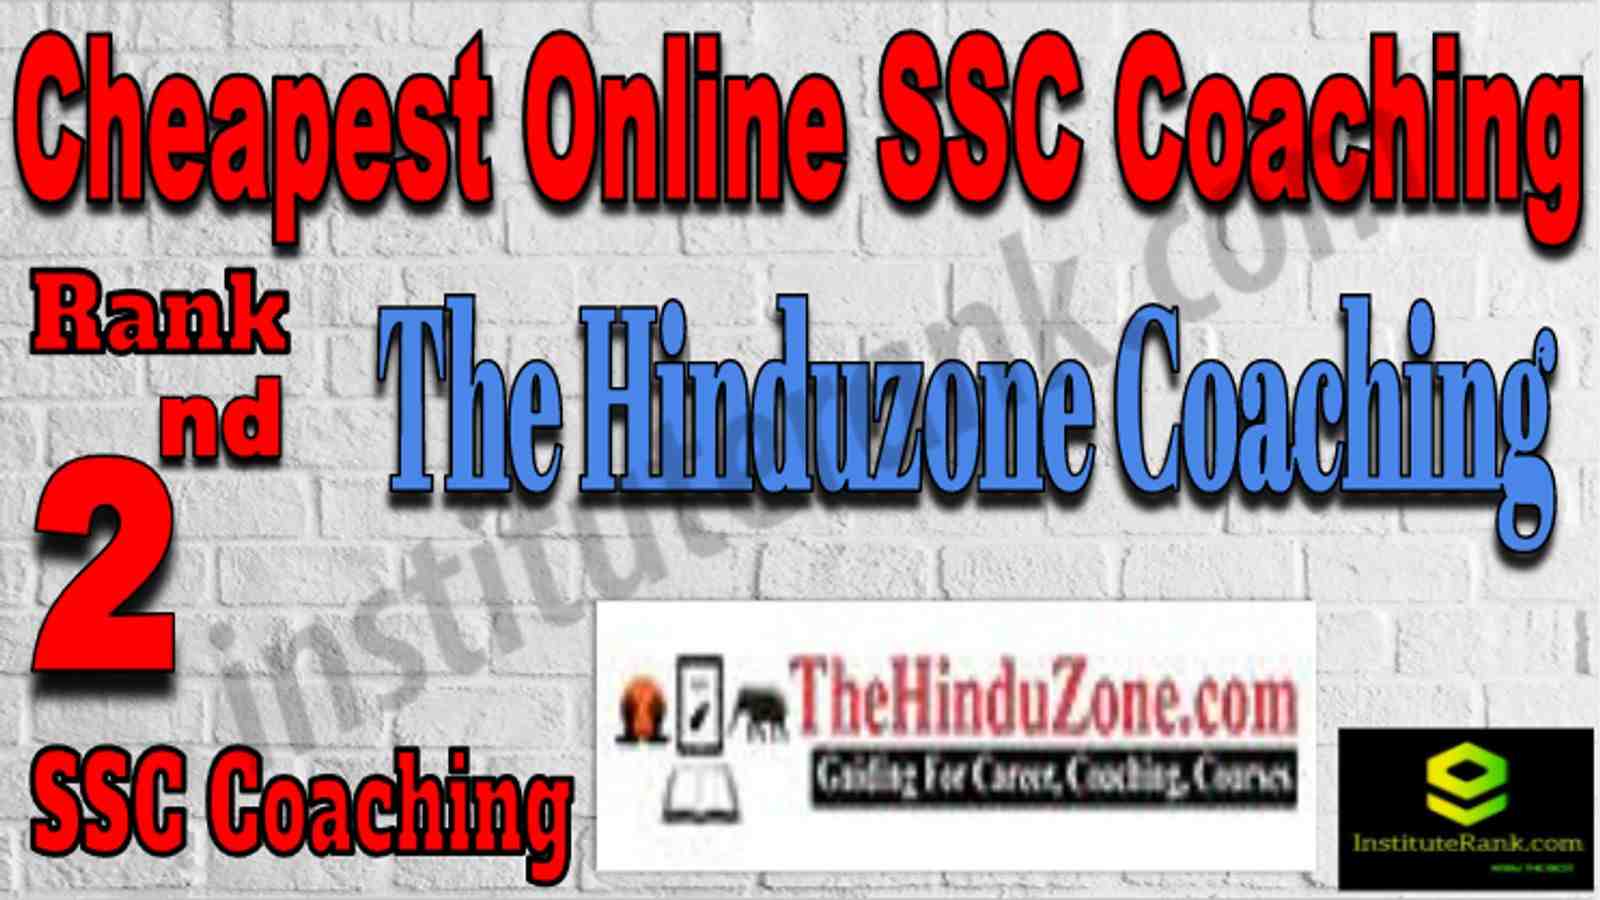 Rank 2 Cheapest Online SSC Coaching